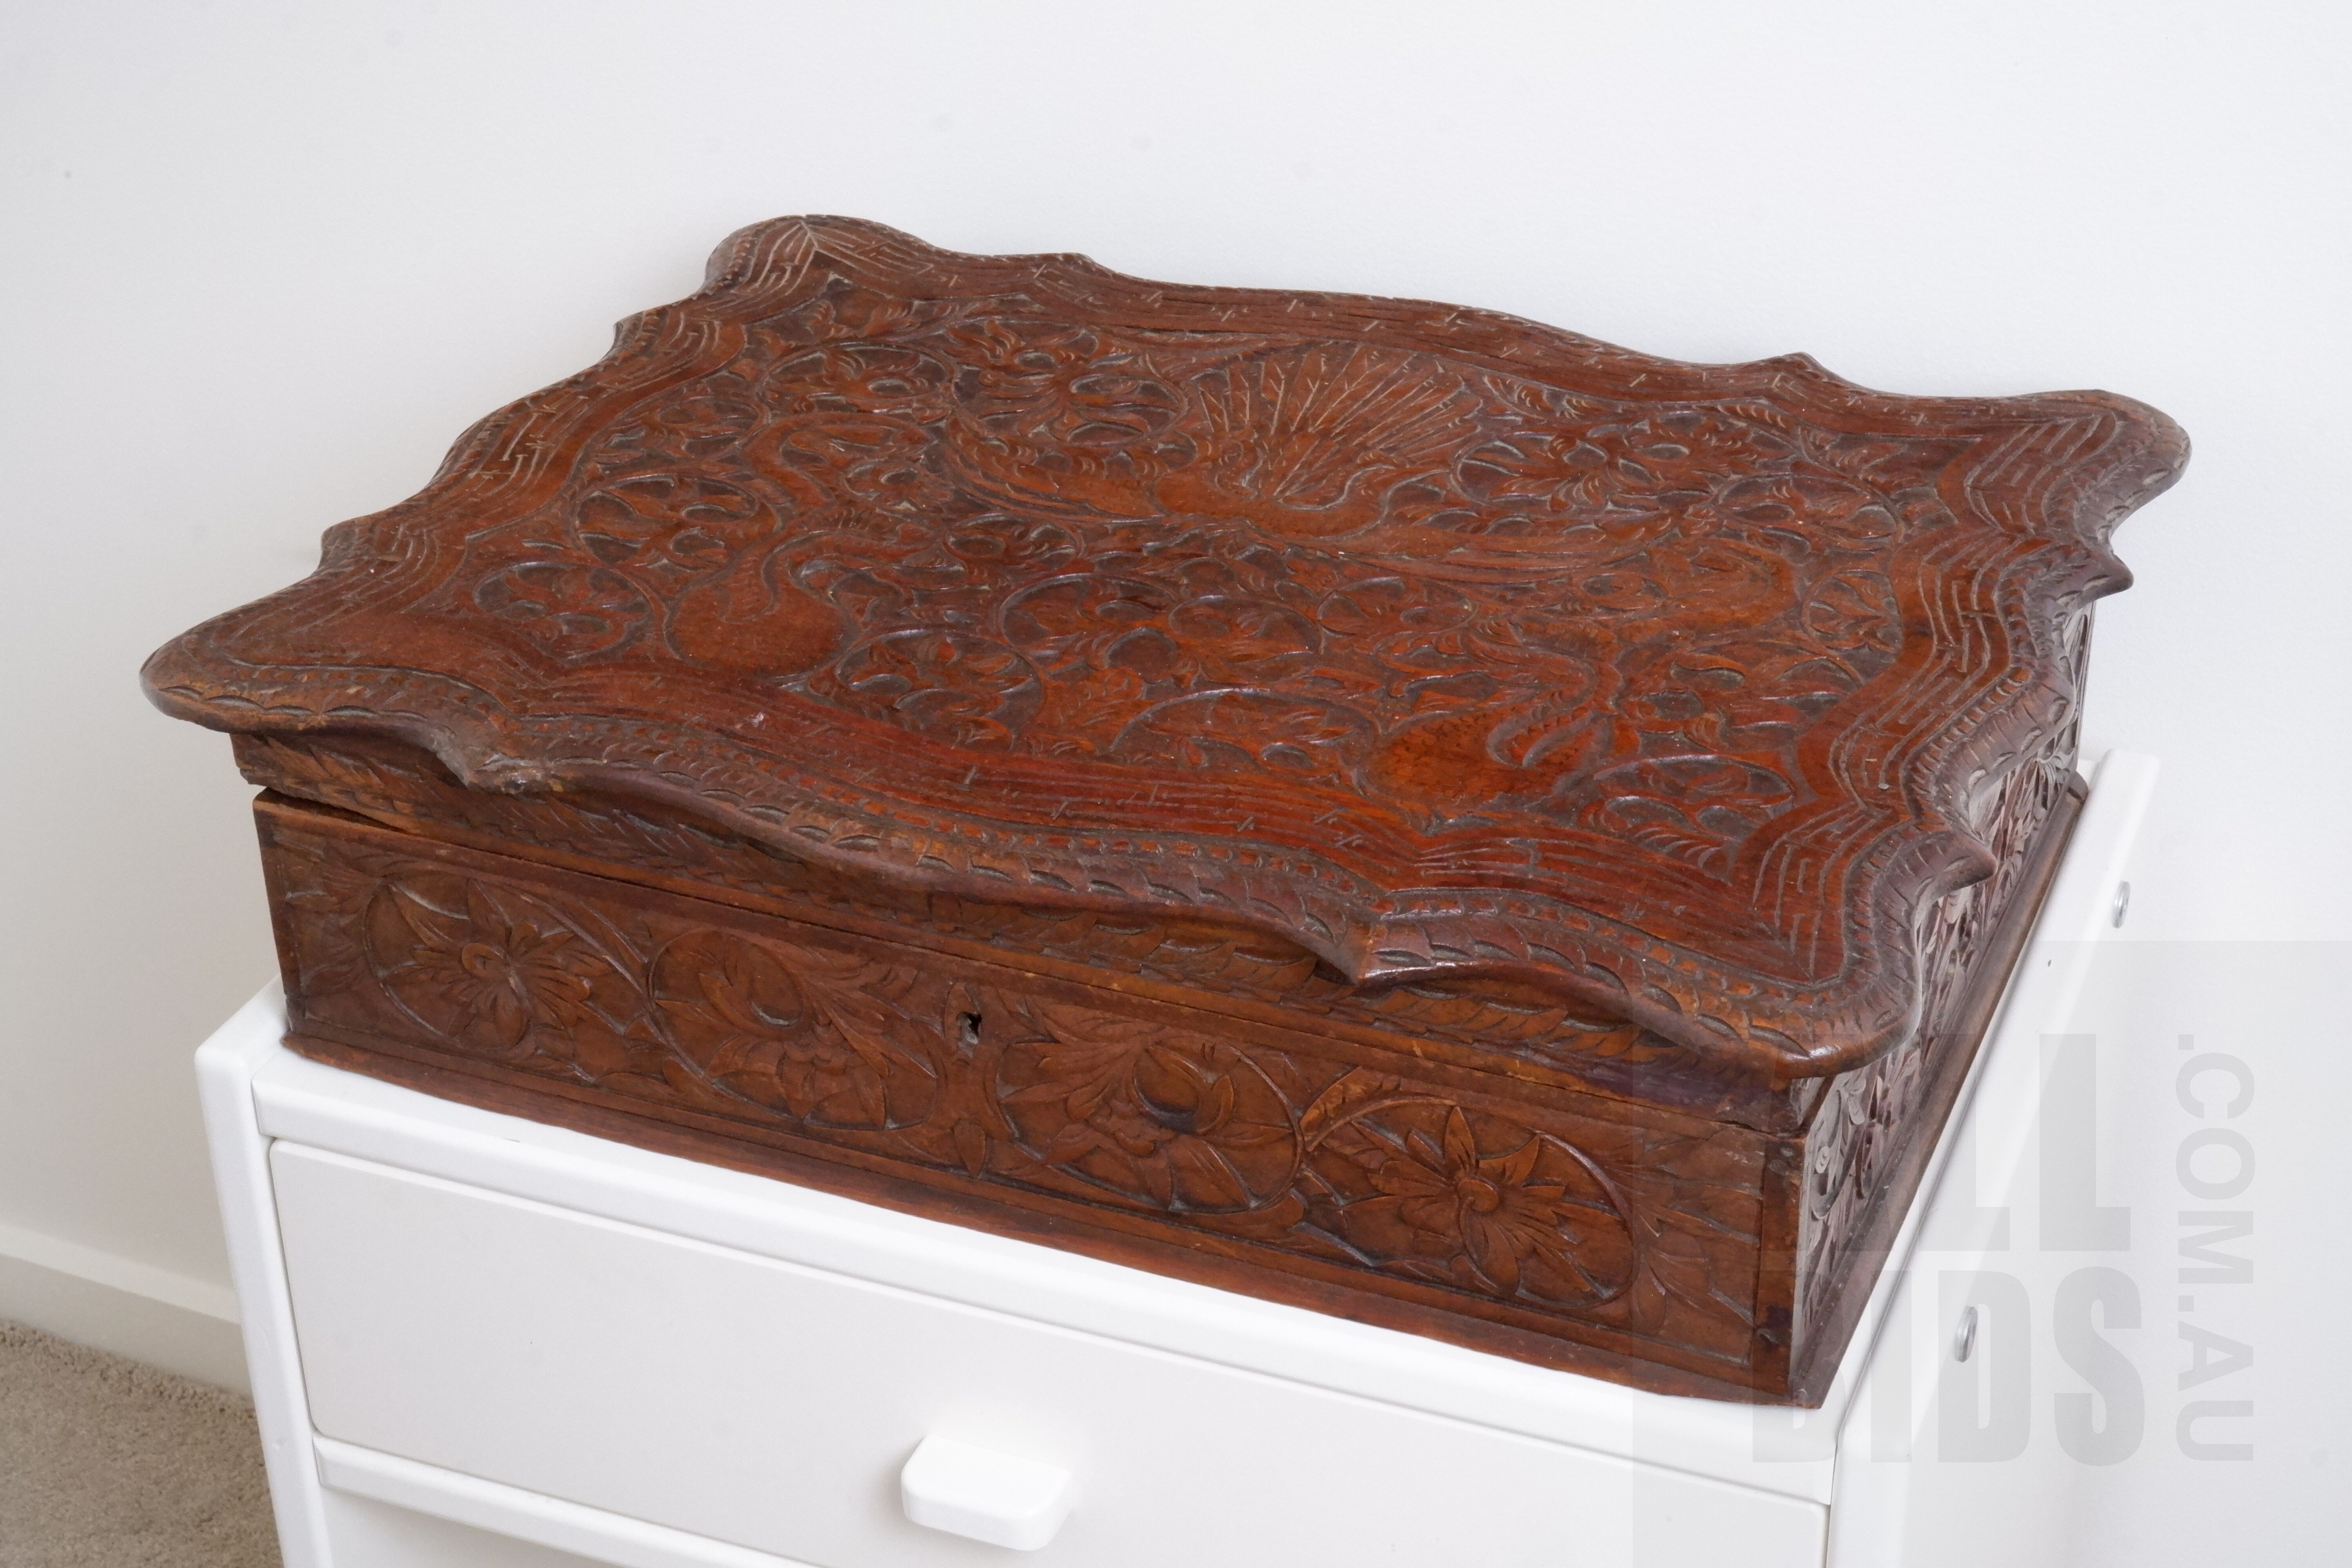 'Korean Profusely Carved Hardwood Writing Box'